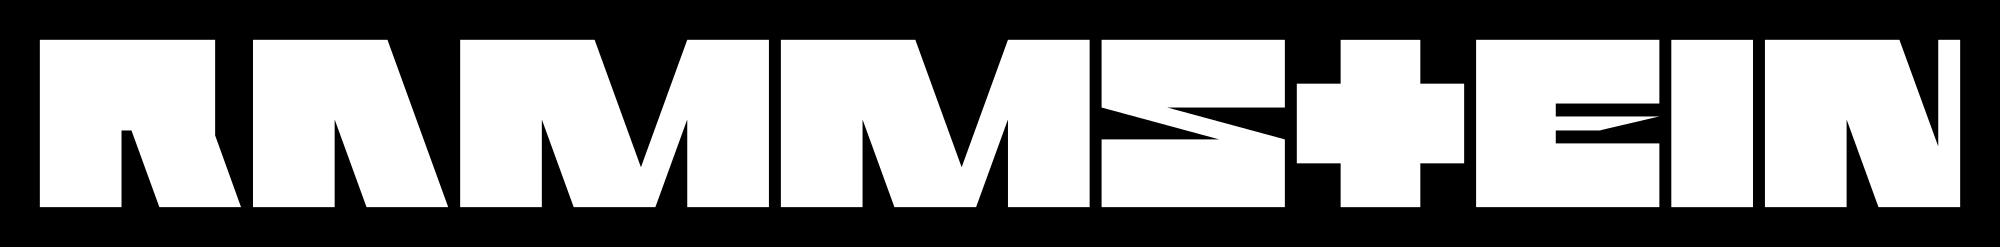 Rammstein Logo - File:Rammstein logo 3.svg - Wikimedia Commons